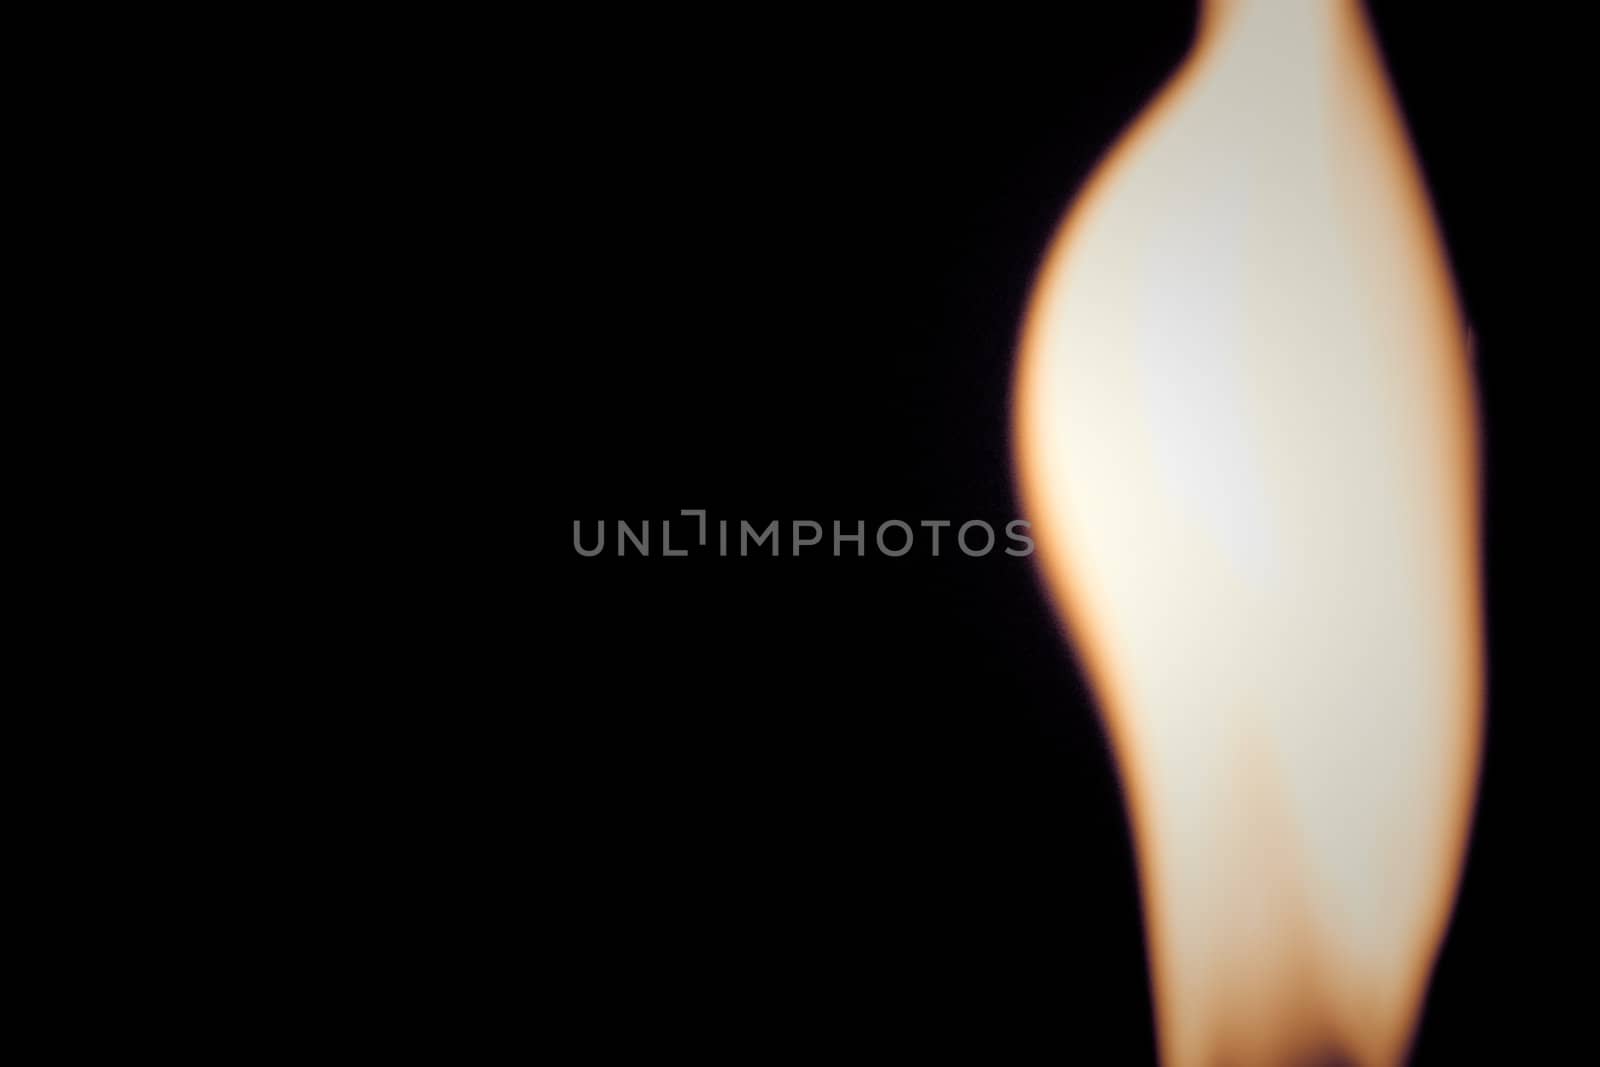 blurry fire flame raising in a dark background